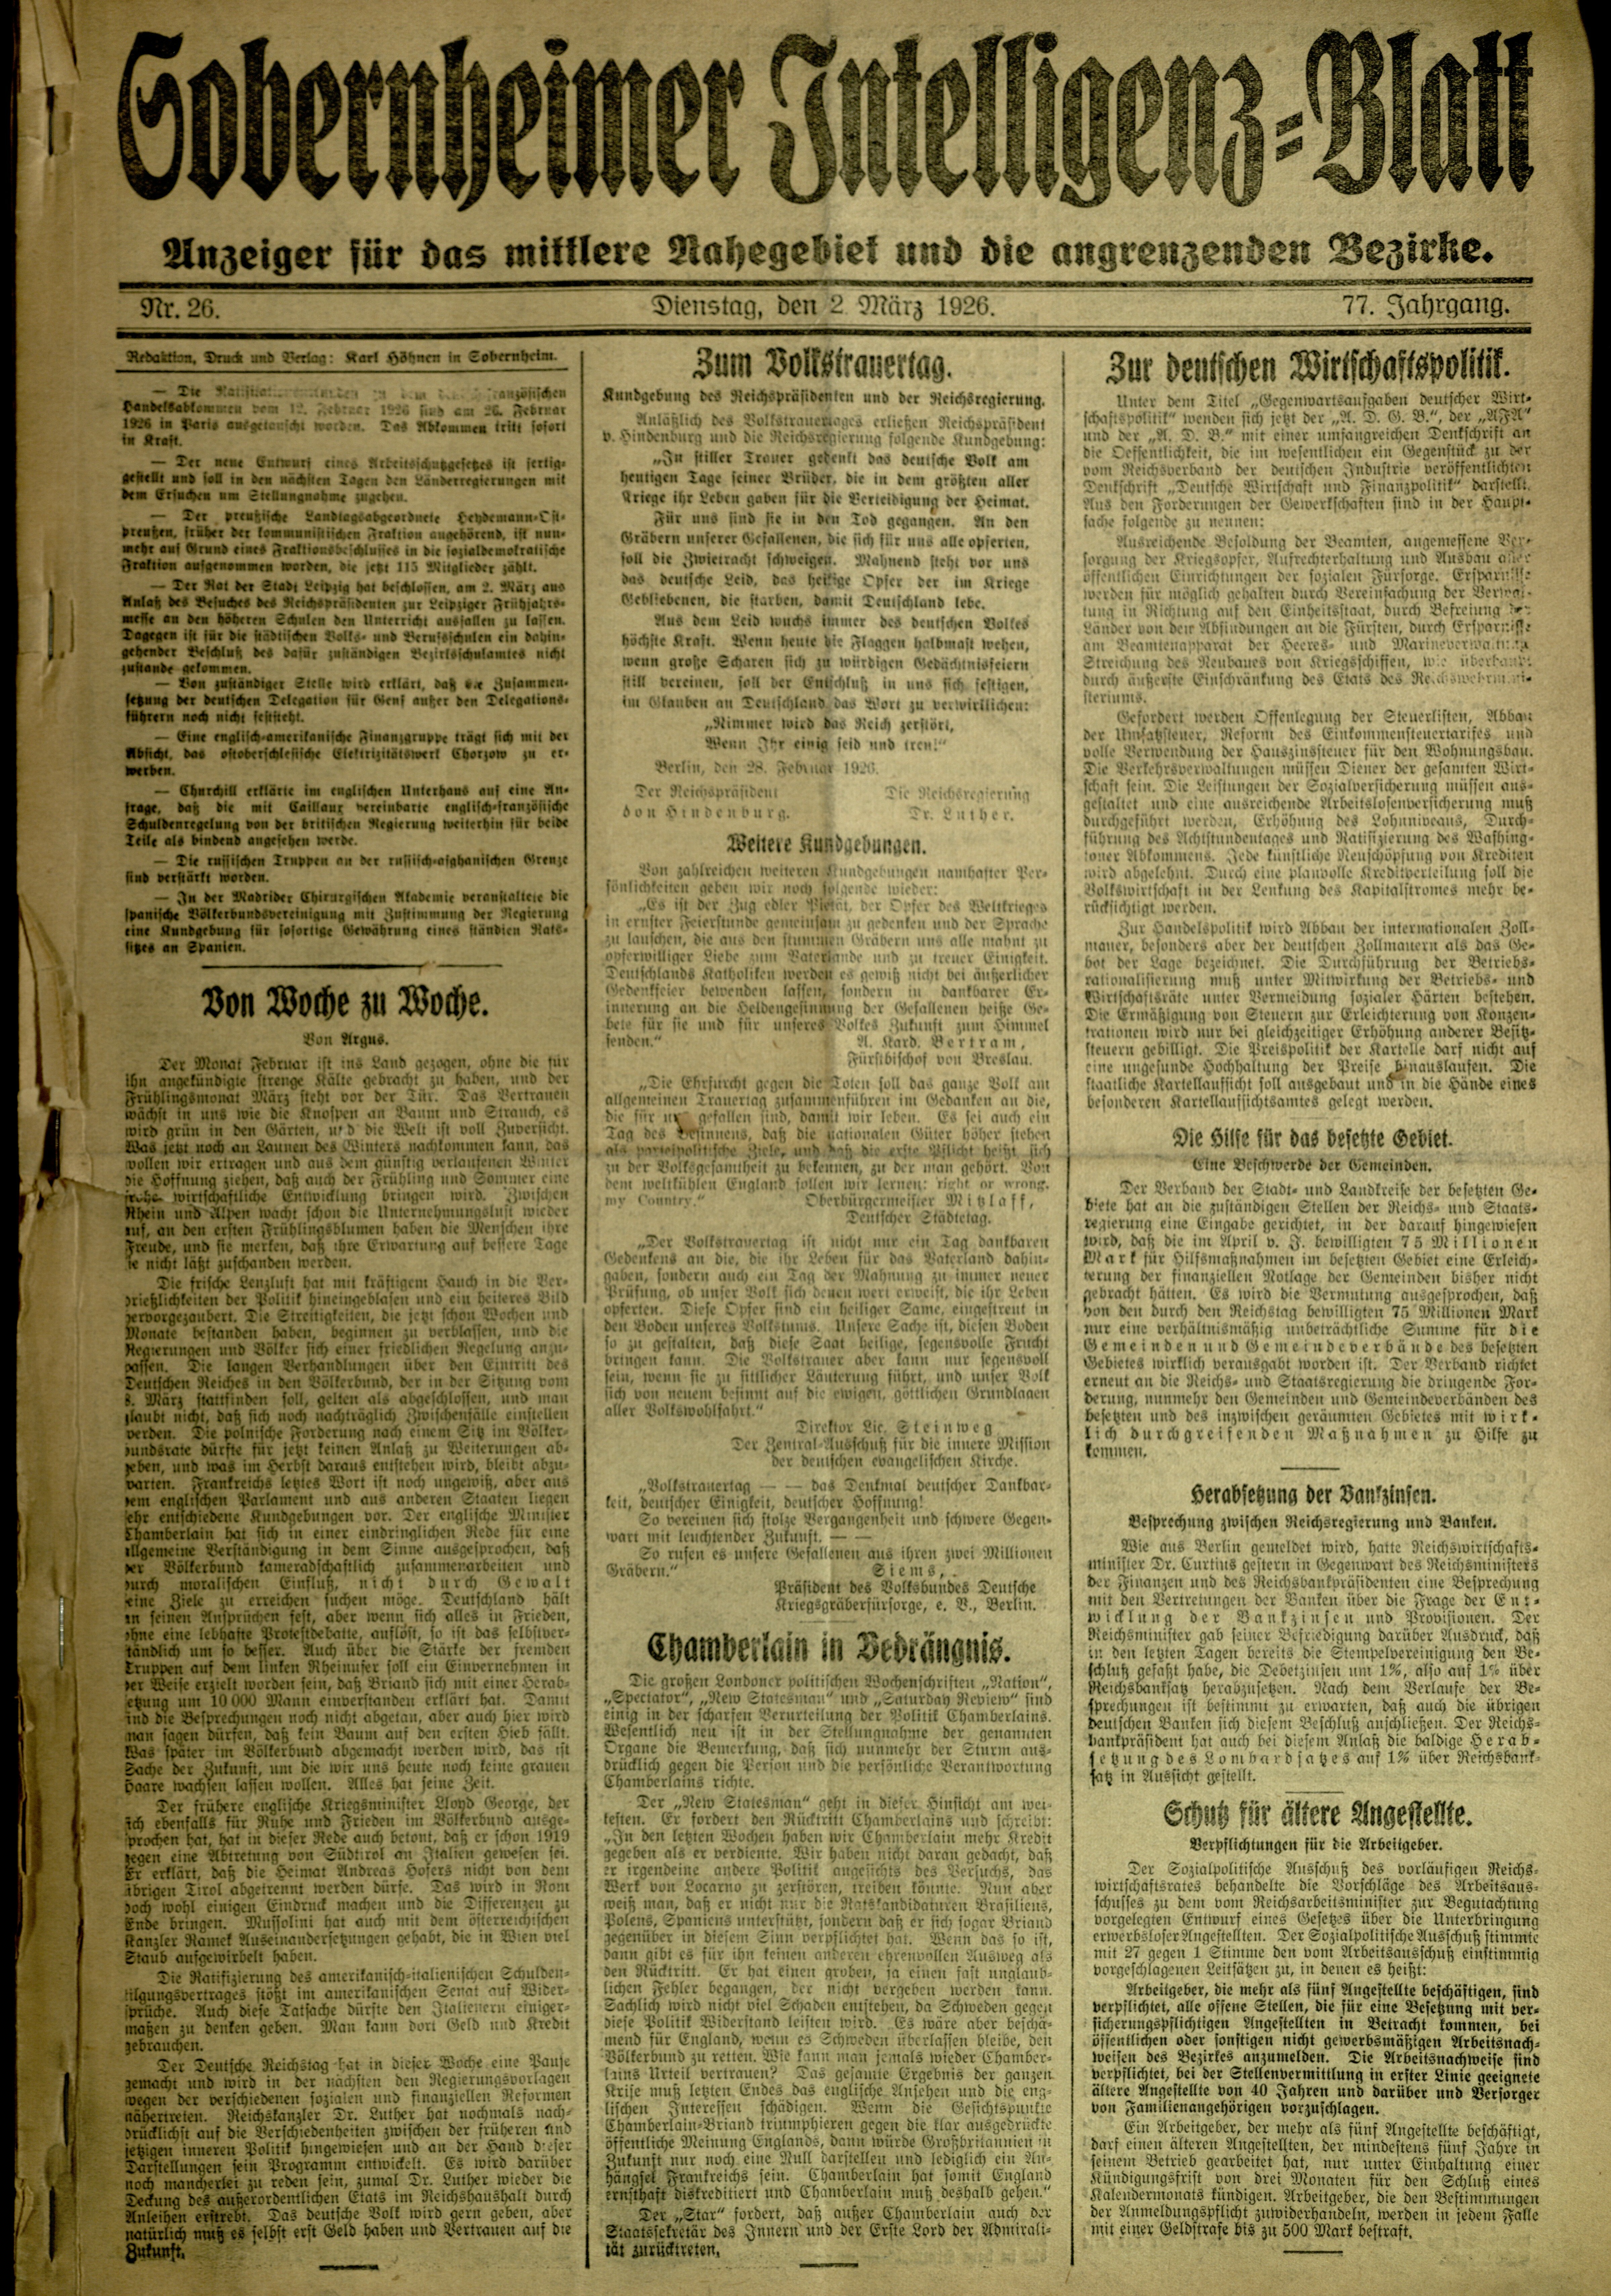 Zeitung: Sobernheimer Intelligenzblatt; März 1926, Jg. 73 Nr. 26 (Heimatmuseum Bad Sobernheim CC BY-NC-SA)